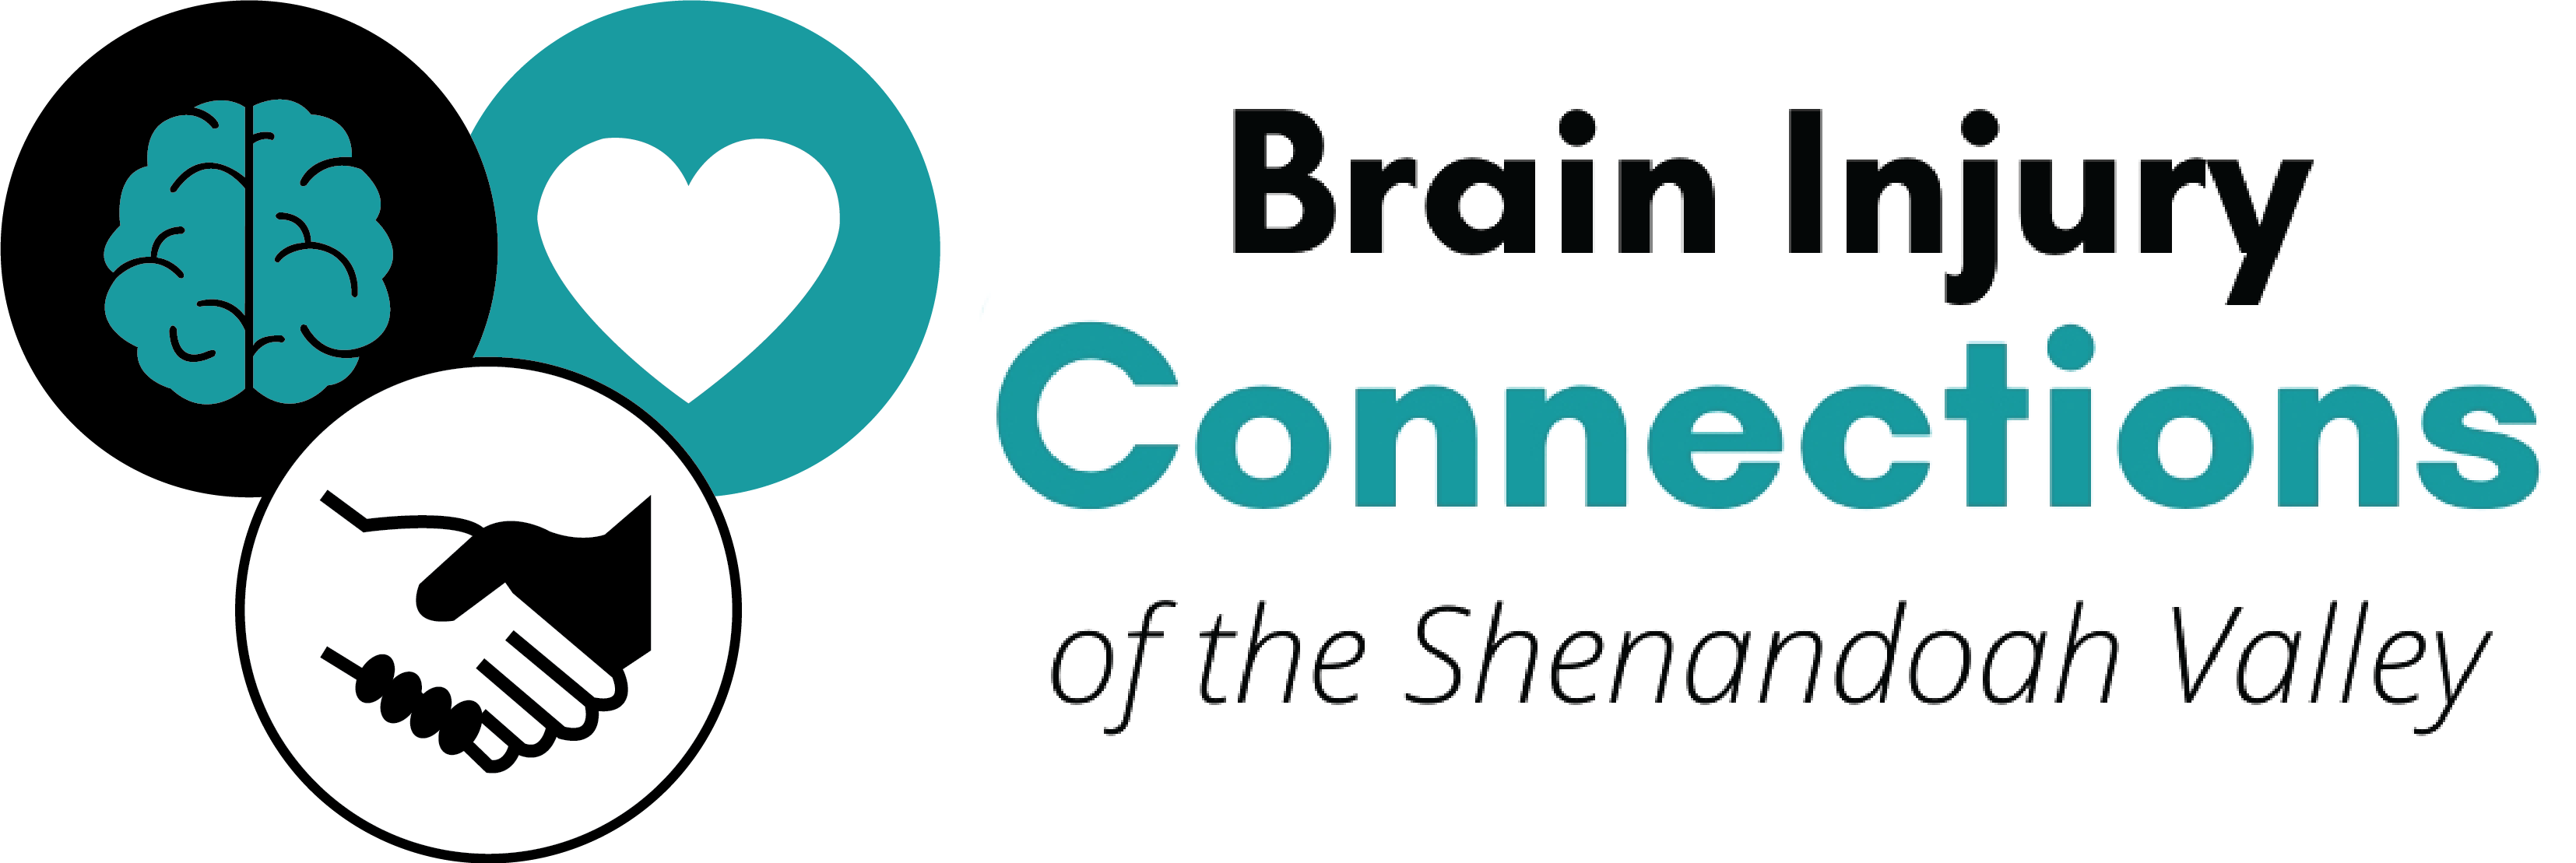 brain injury connections logo